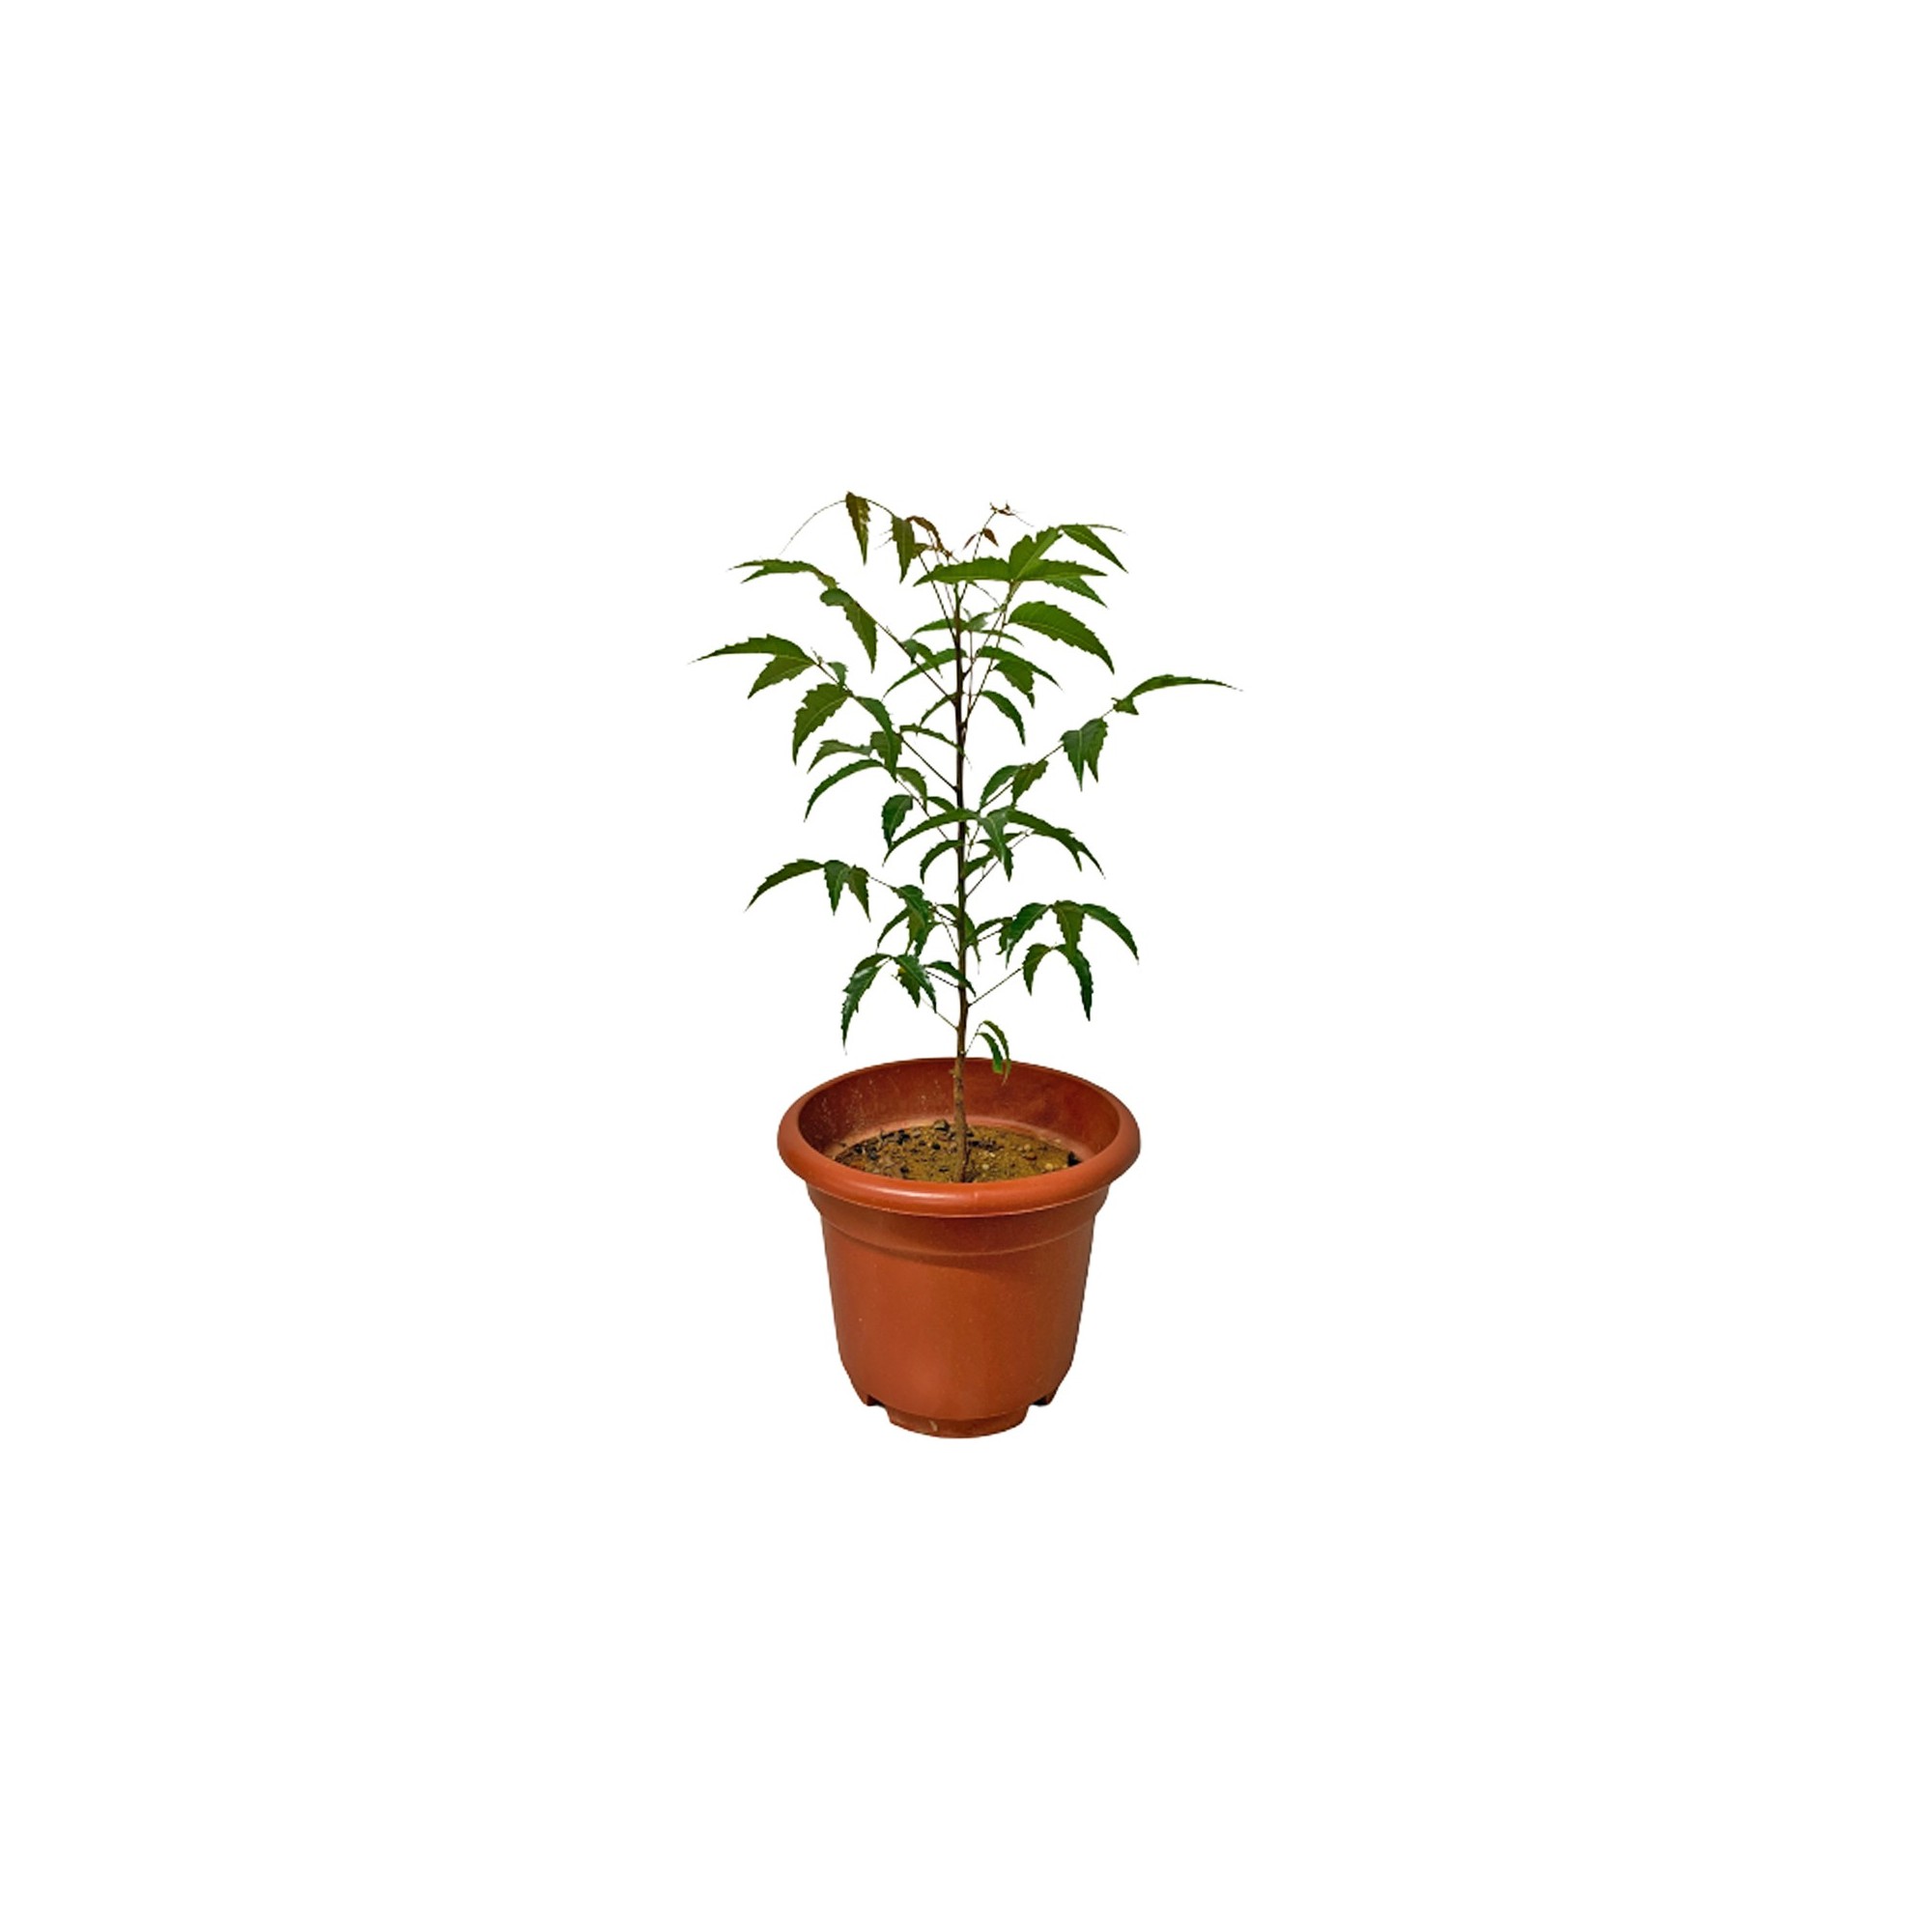 neem plant (azadirachta indica)